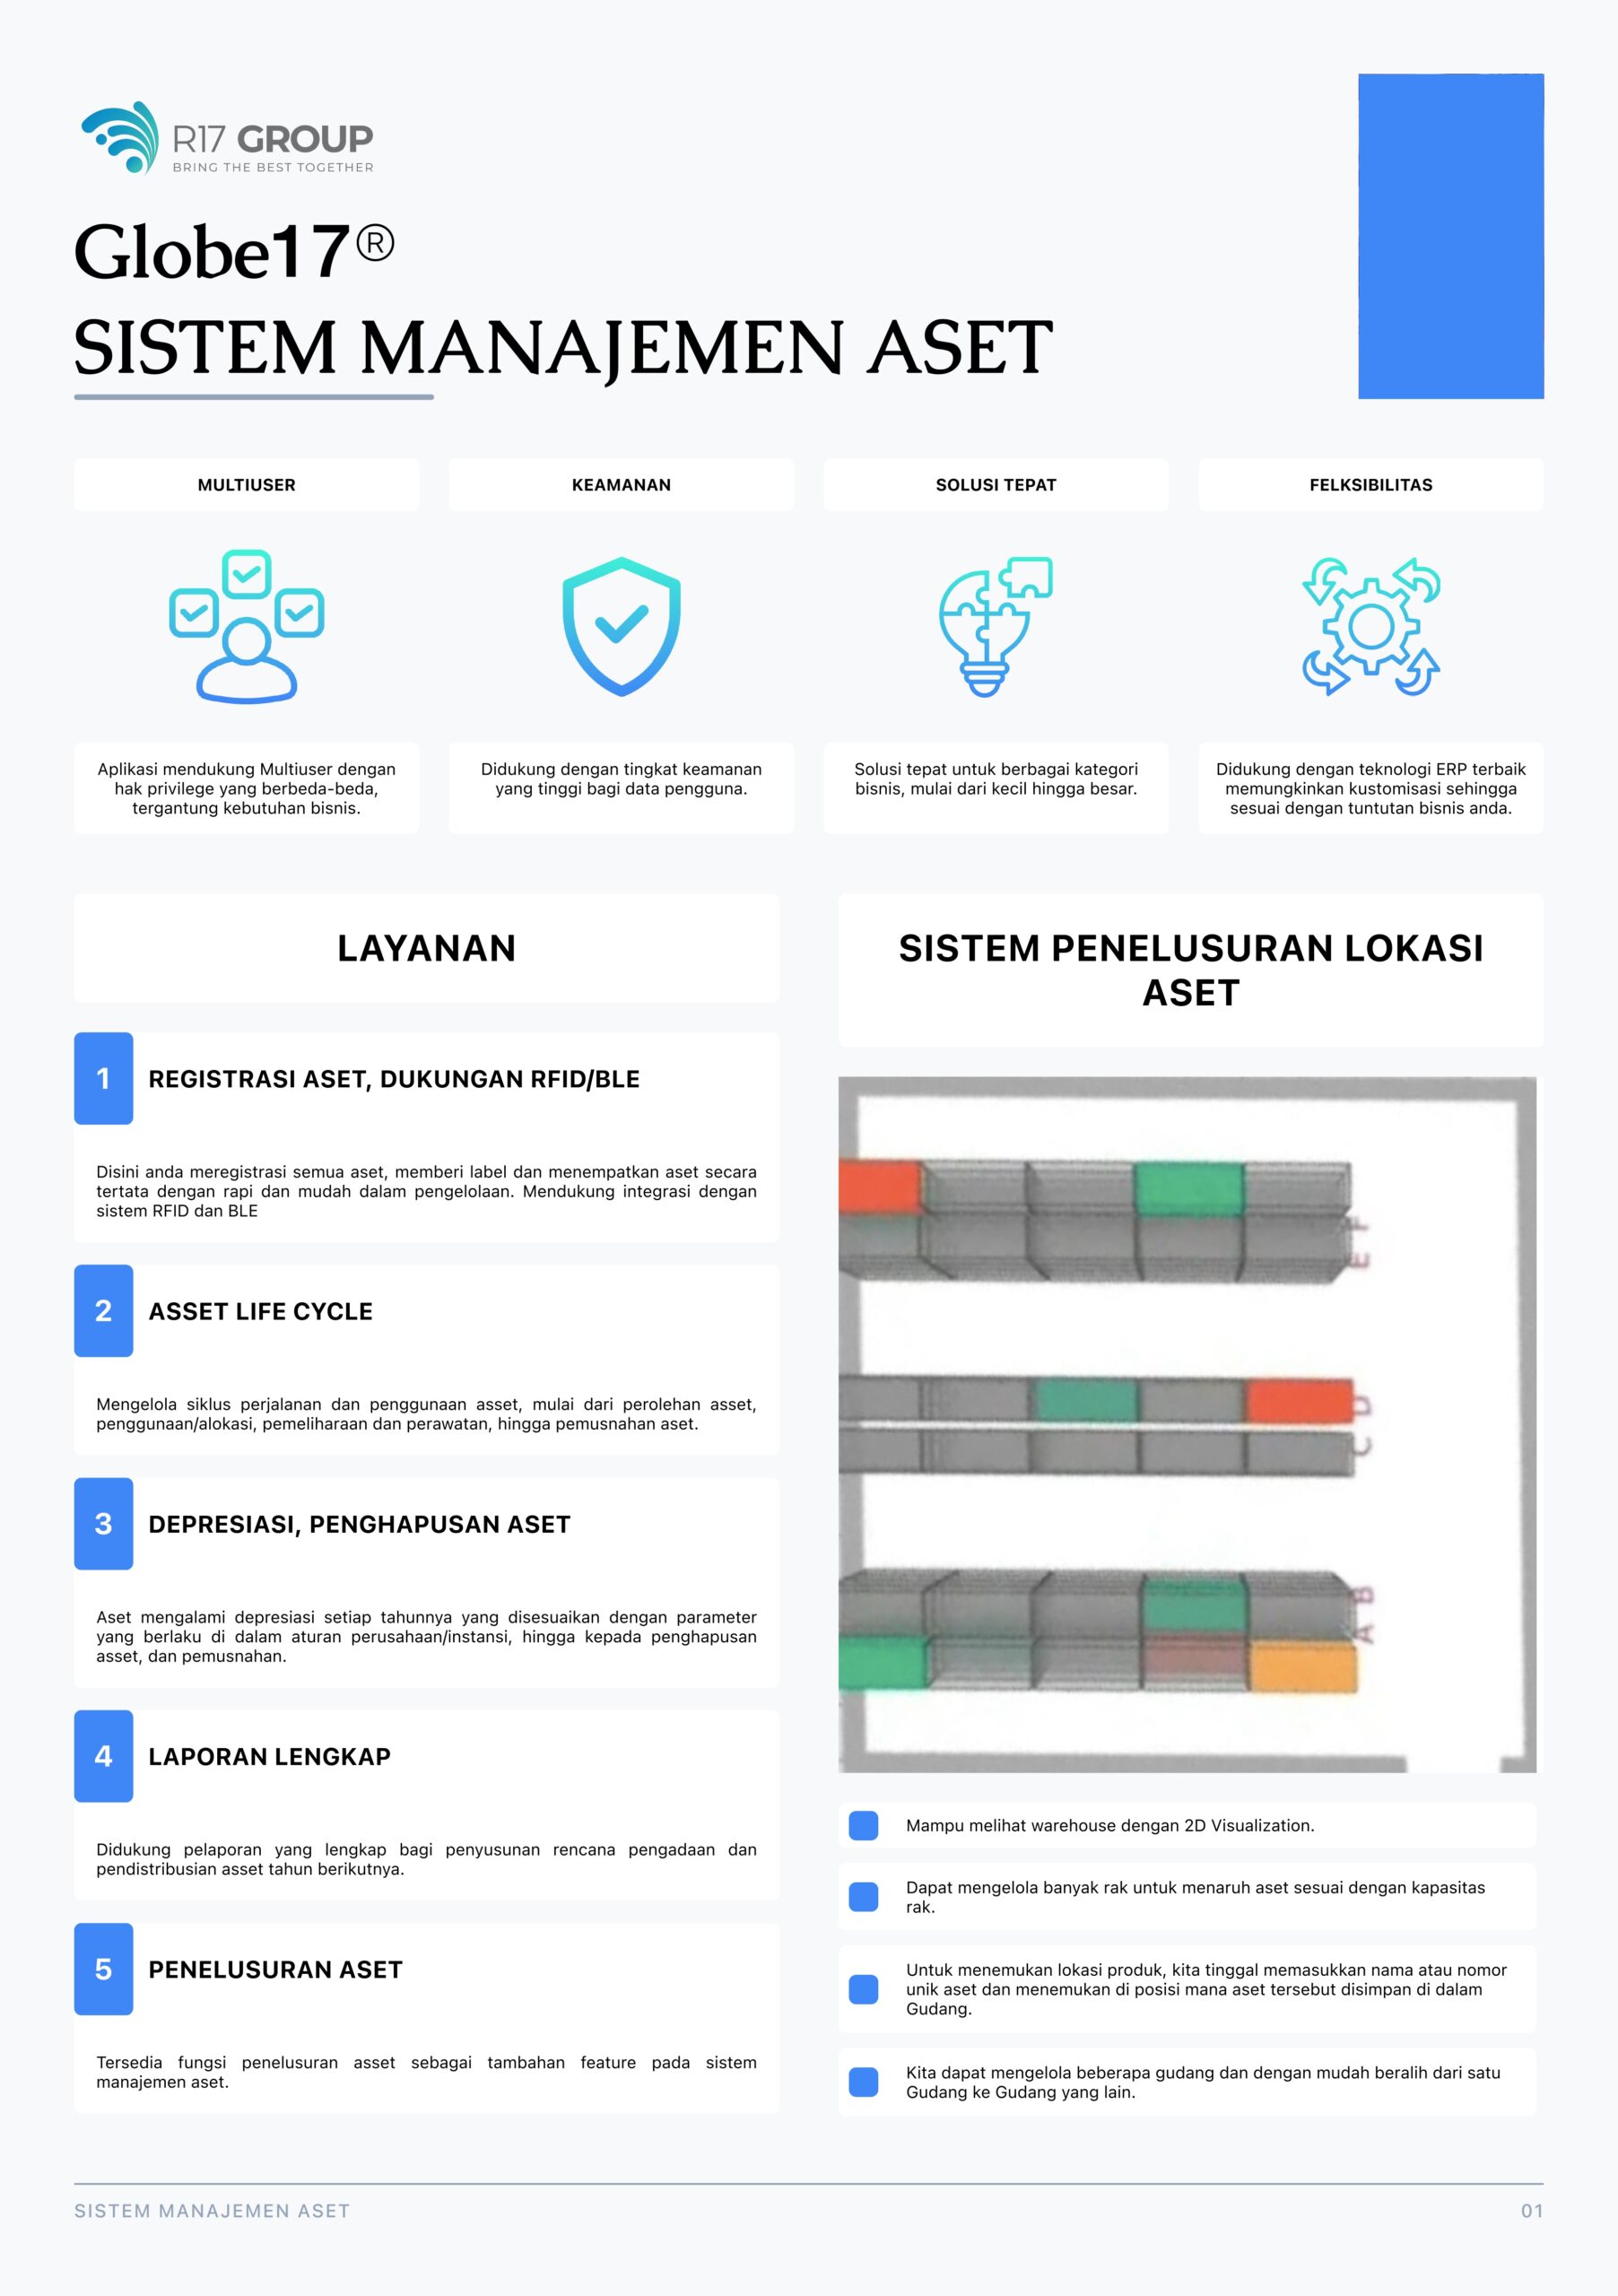 Globe17 - Asset Management System